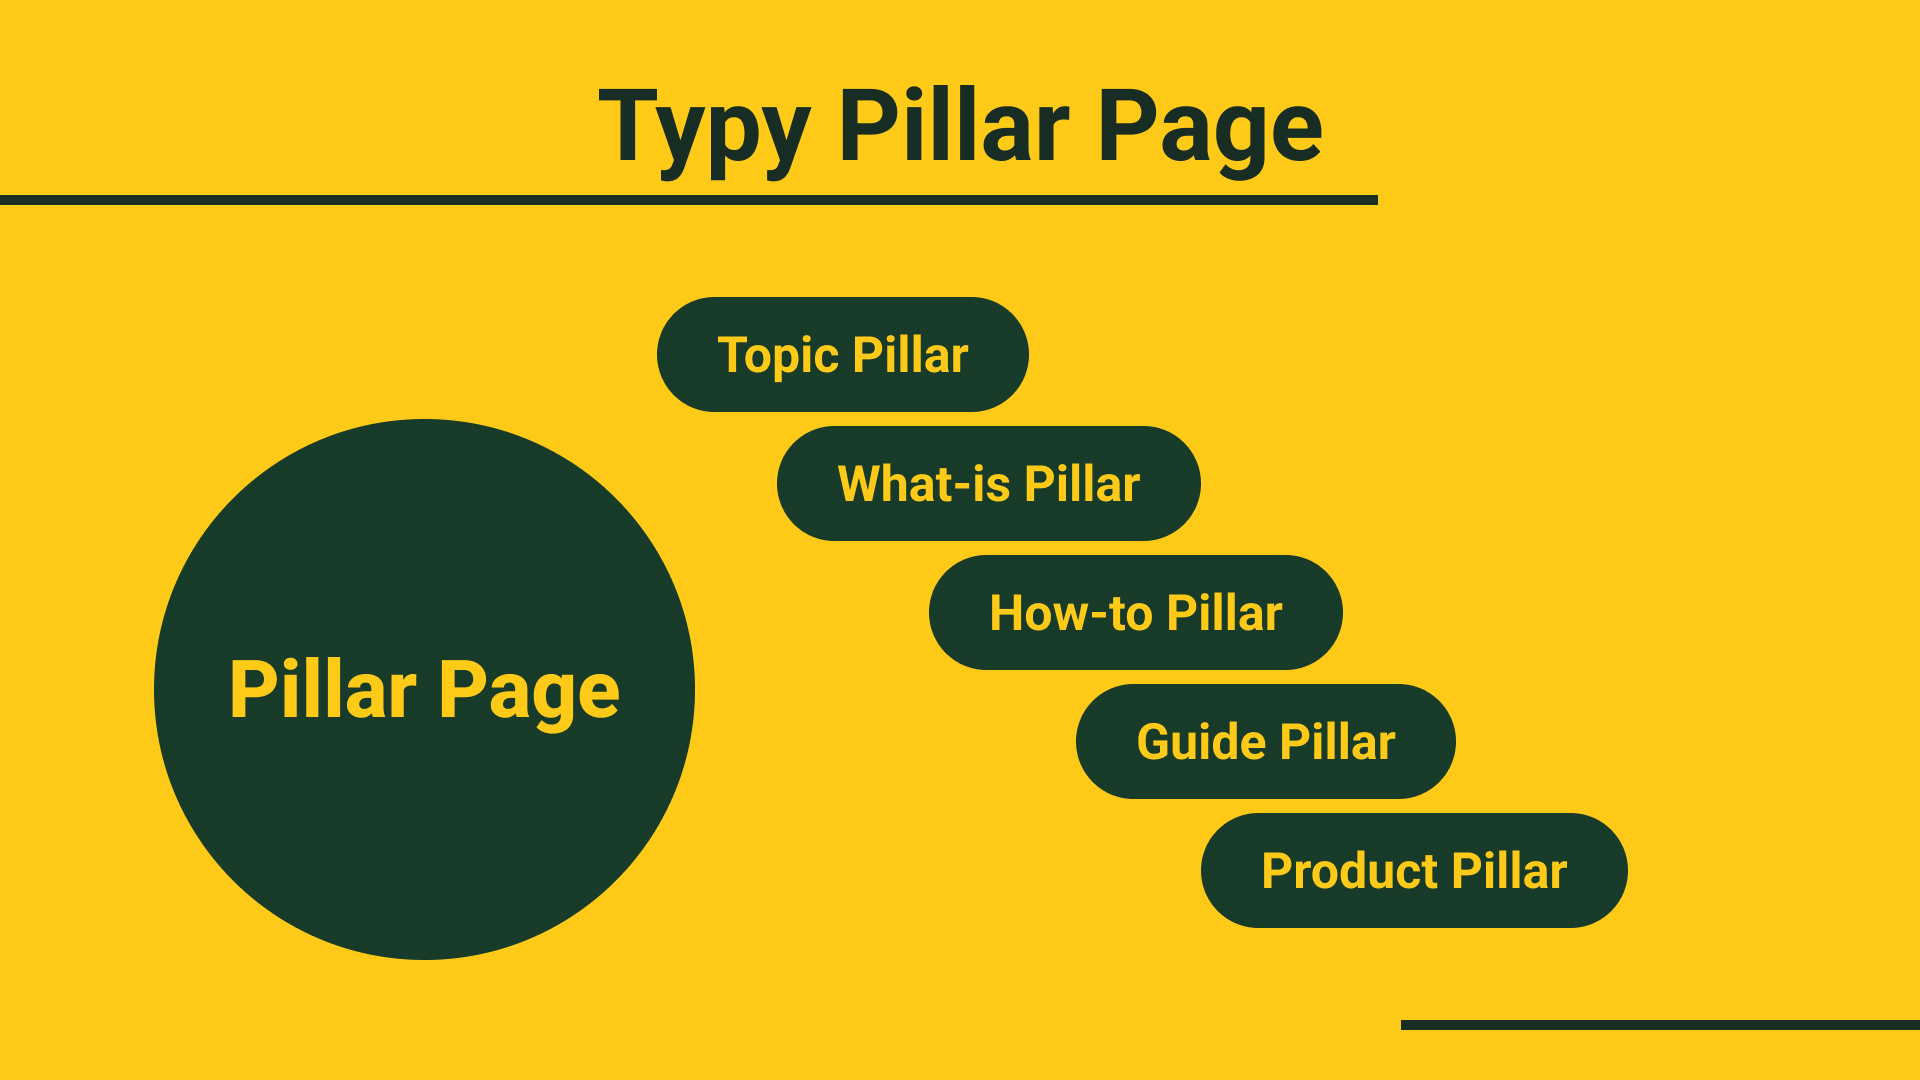 Typy pillar page